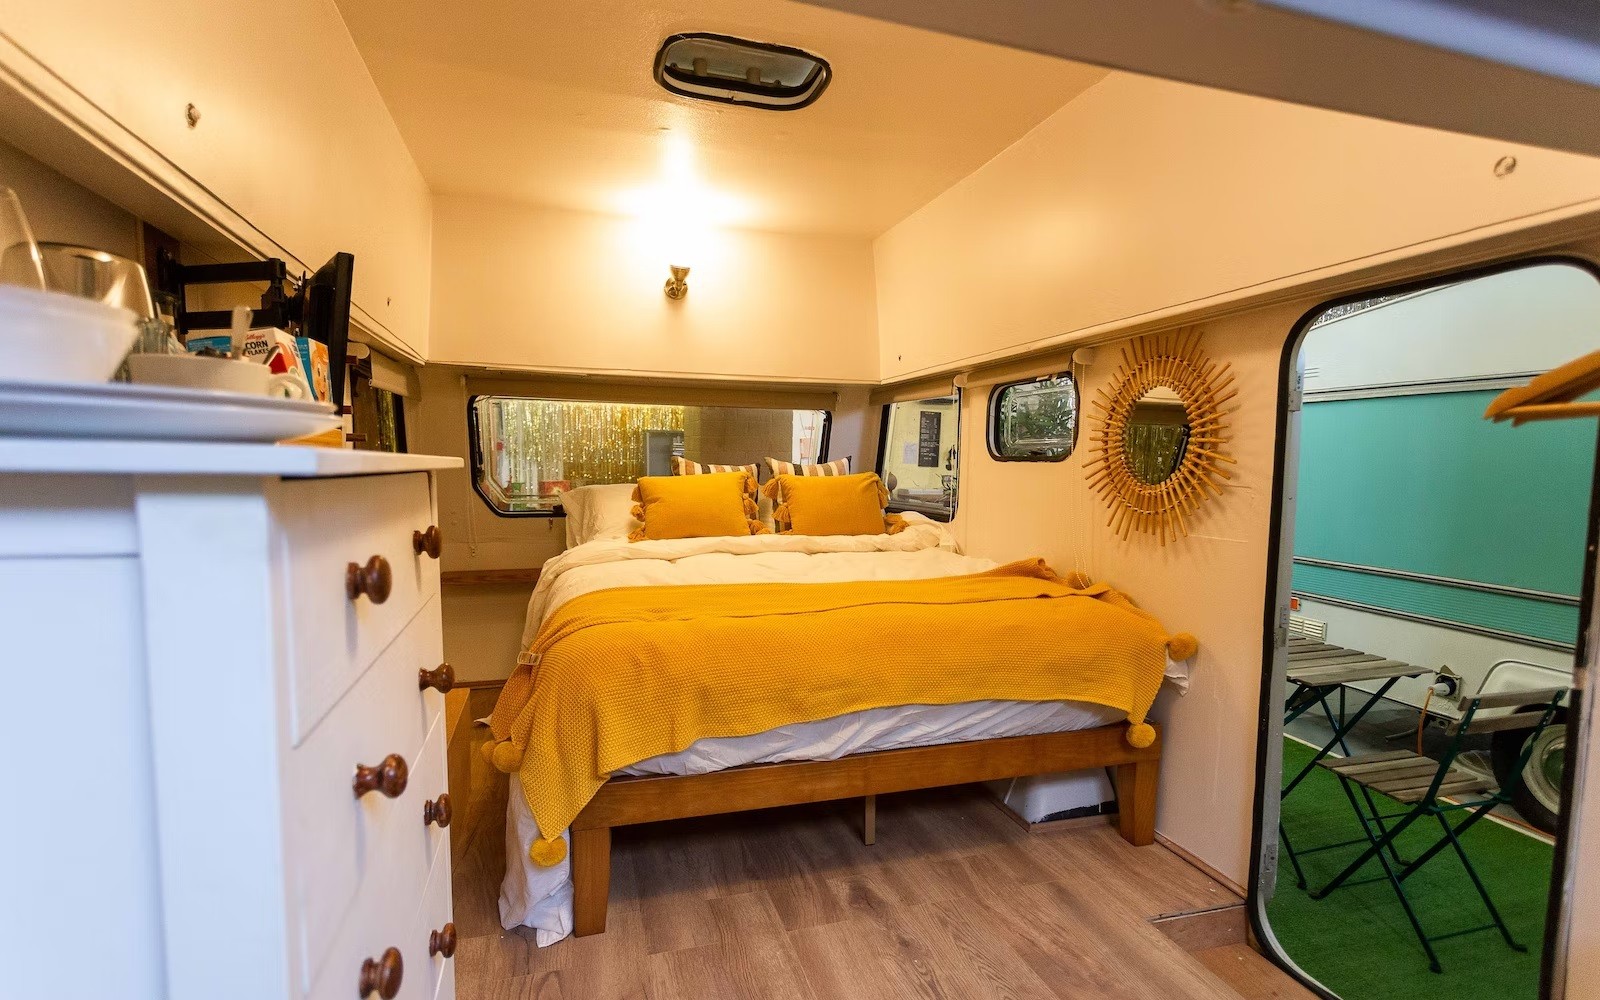 indoor campground hostel hosts vintage RVs as rooms